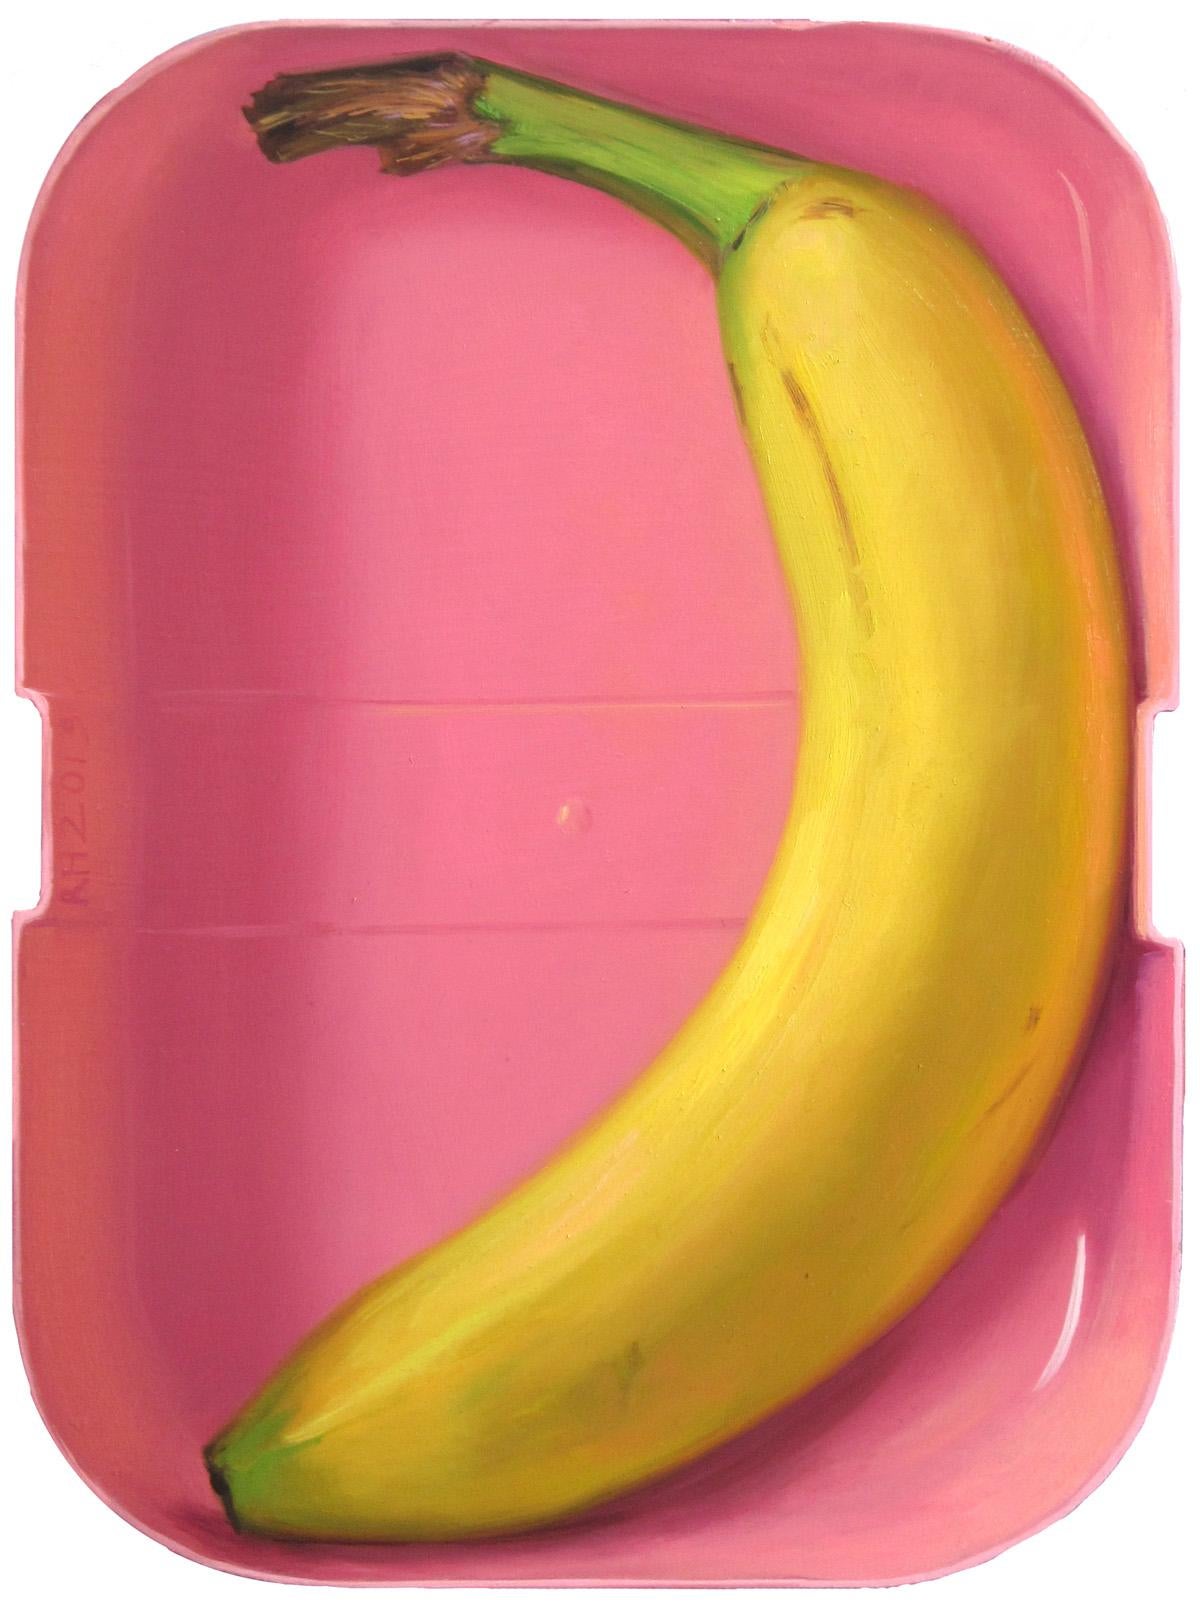 Rutger Hiemstra Still-Life Painting - Banana in lunchbox- 21st Century Contemporary Still-life Painting of a banana